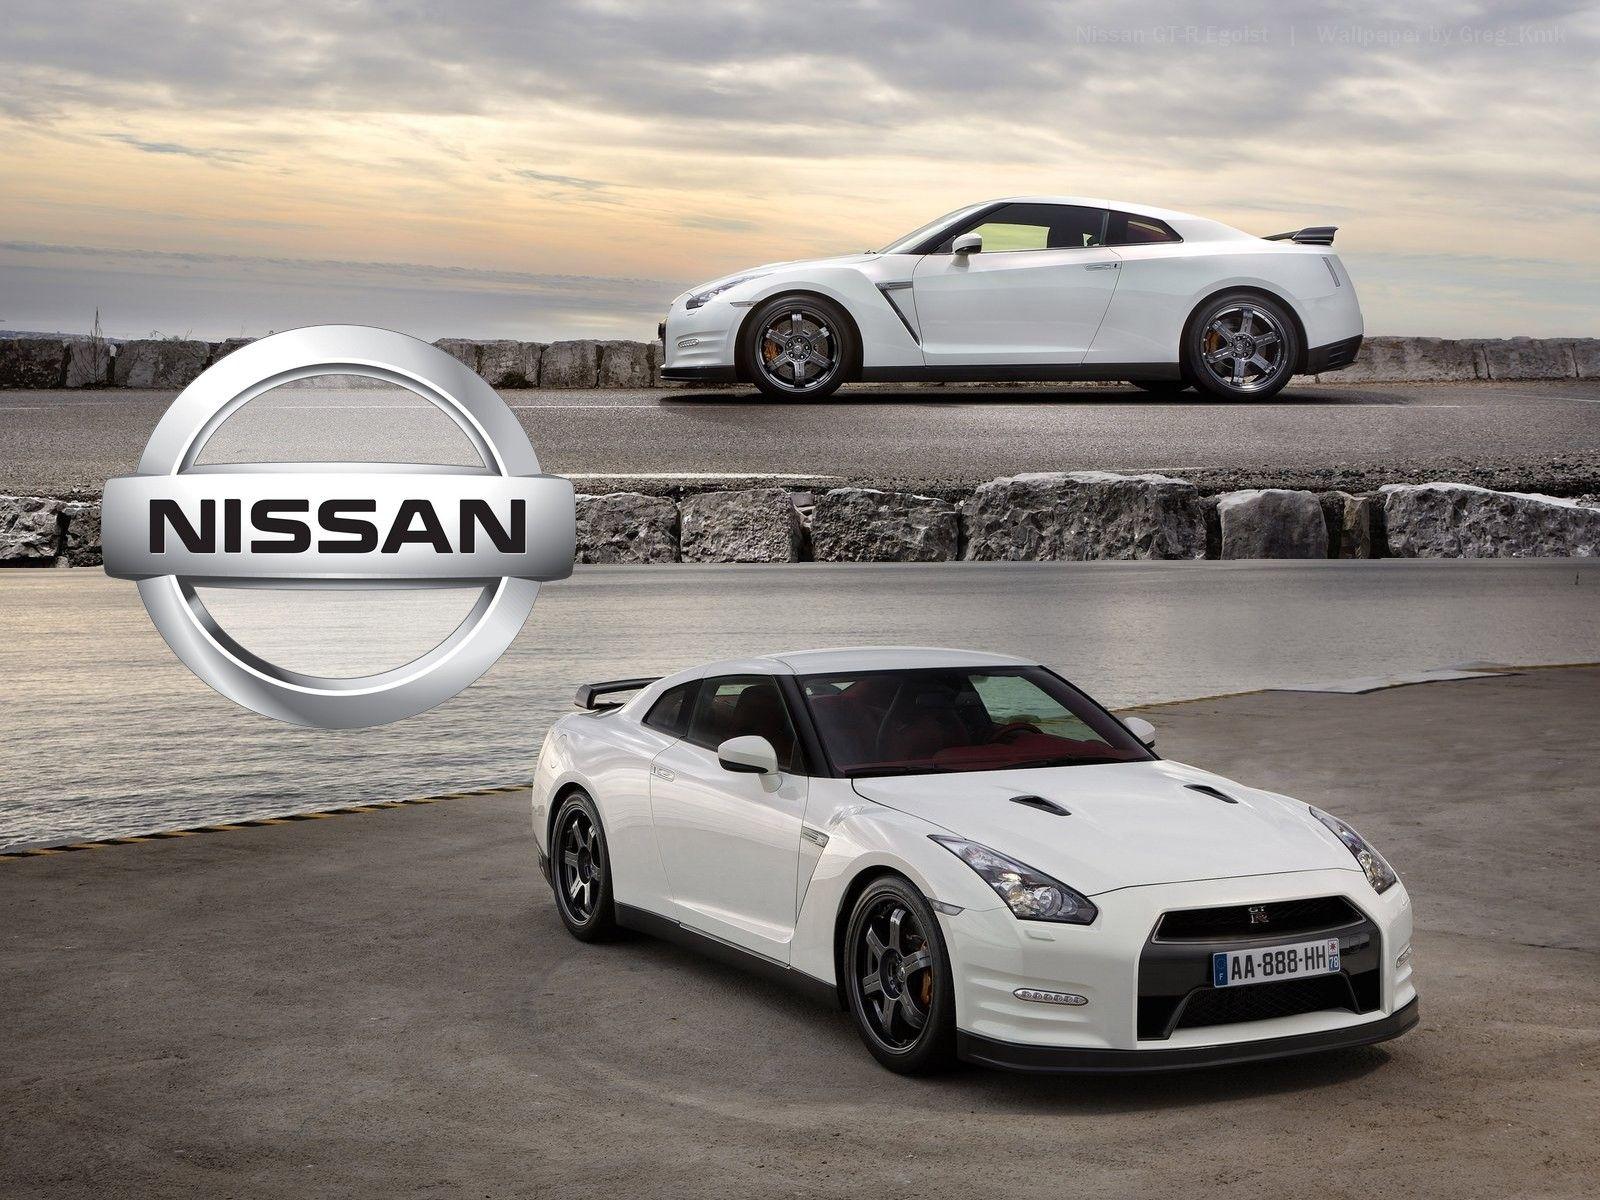 Nissan Wallpaper, Nissan Background, Nissan Free HD Wallpaper